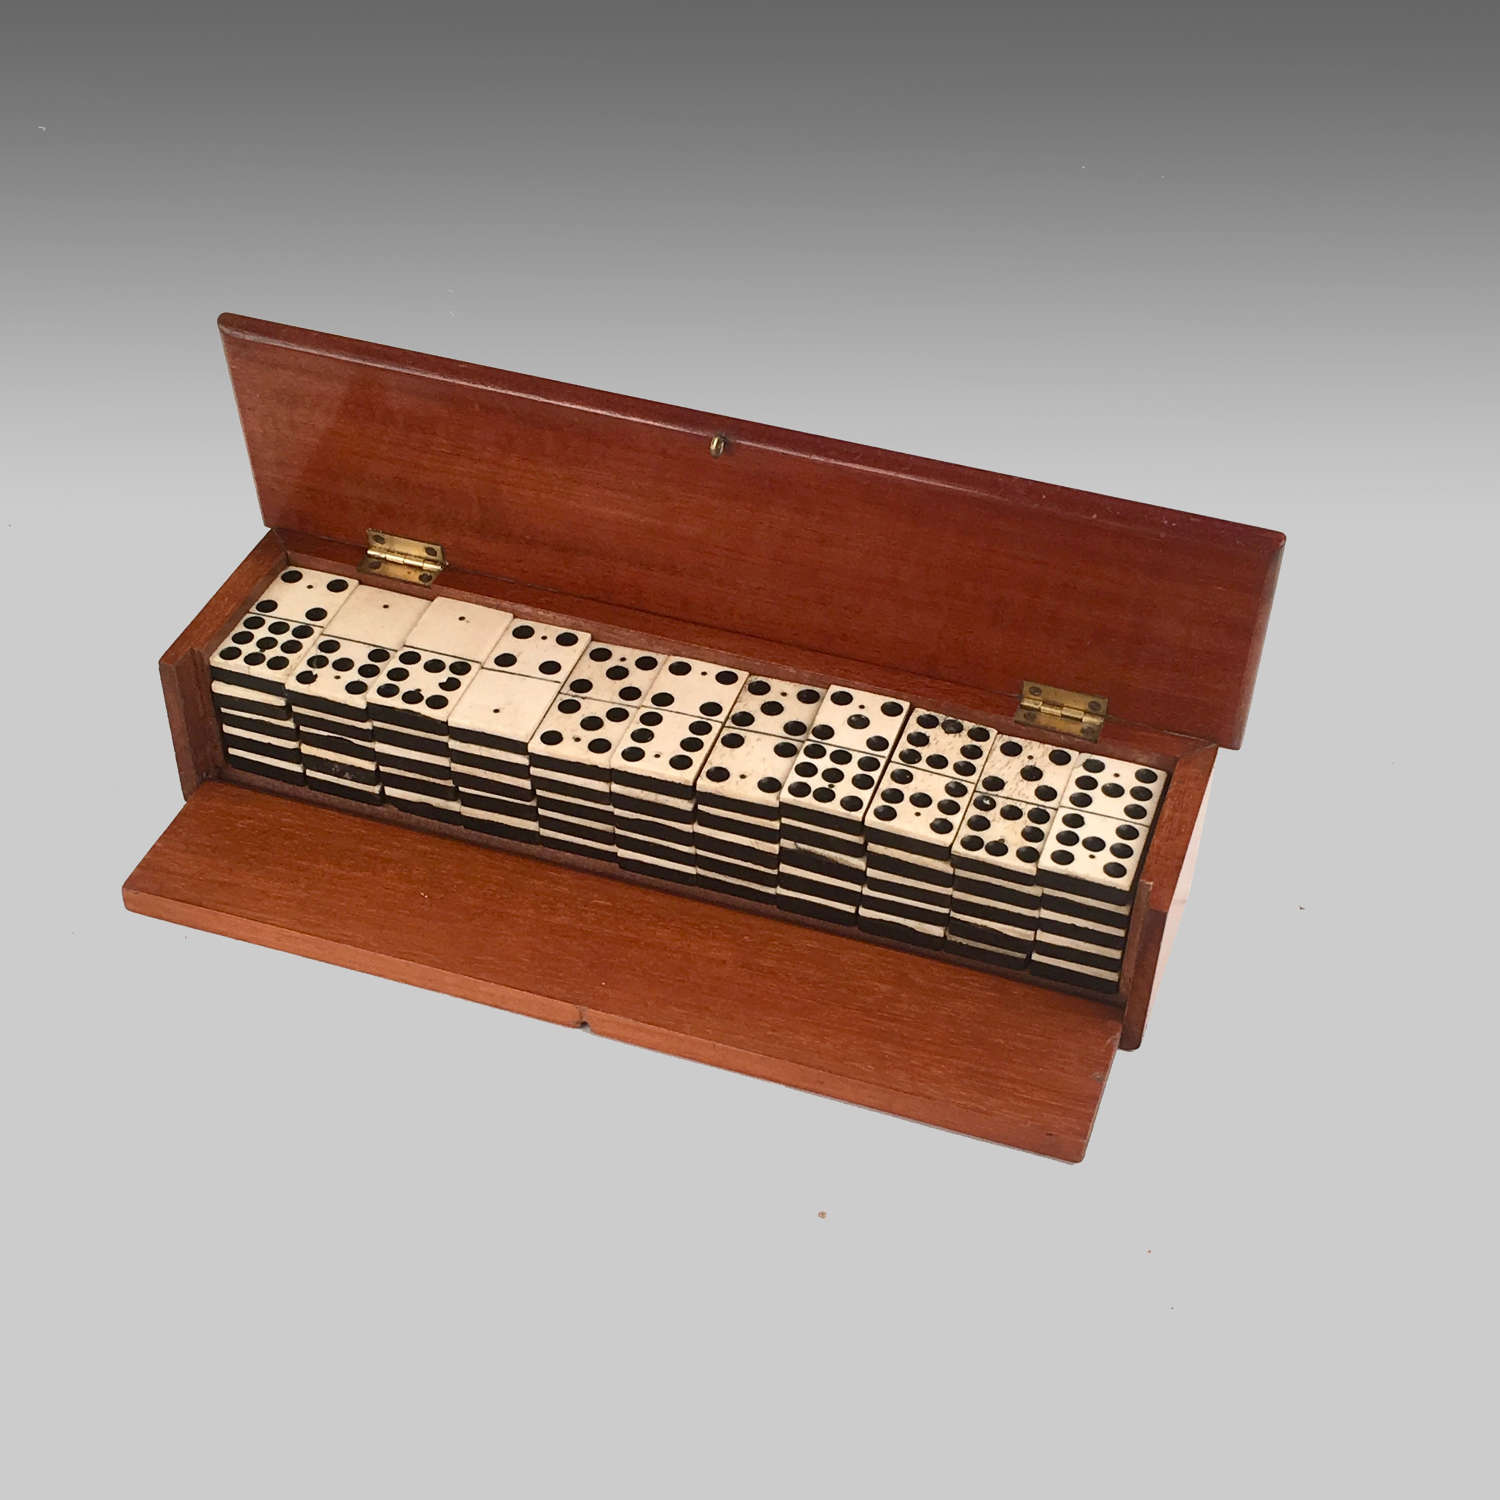 19th century antique mahogany cased set of dominoes